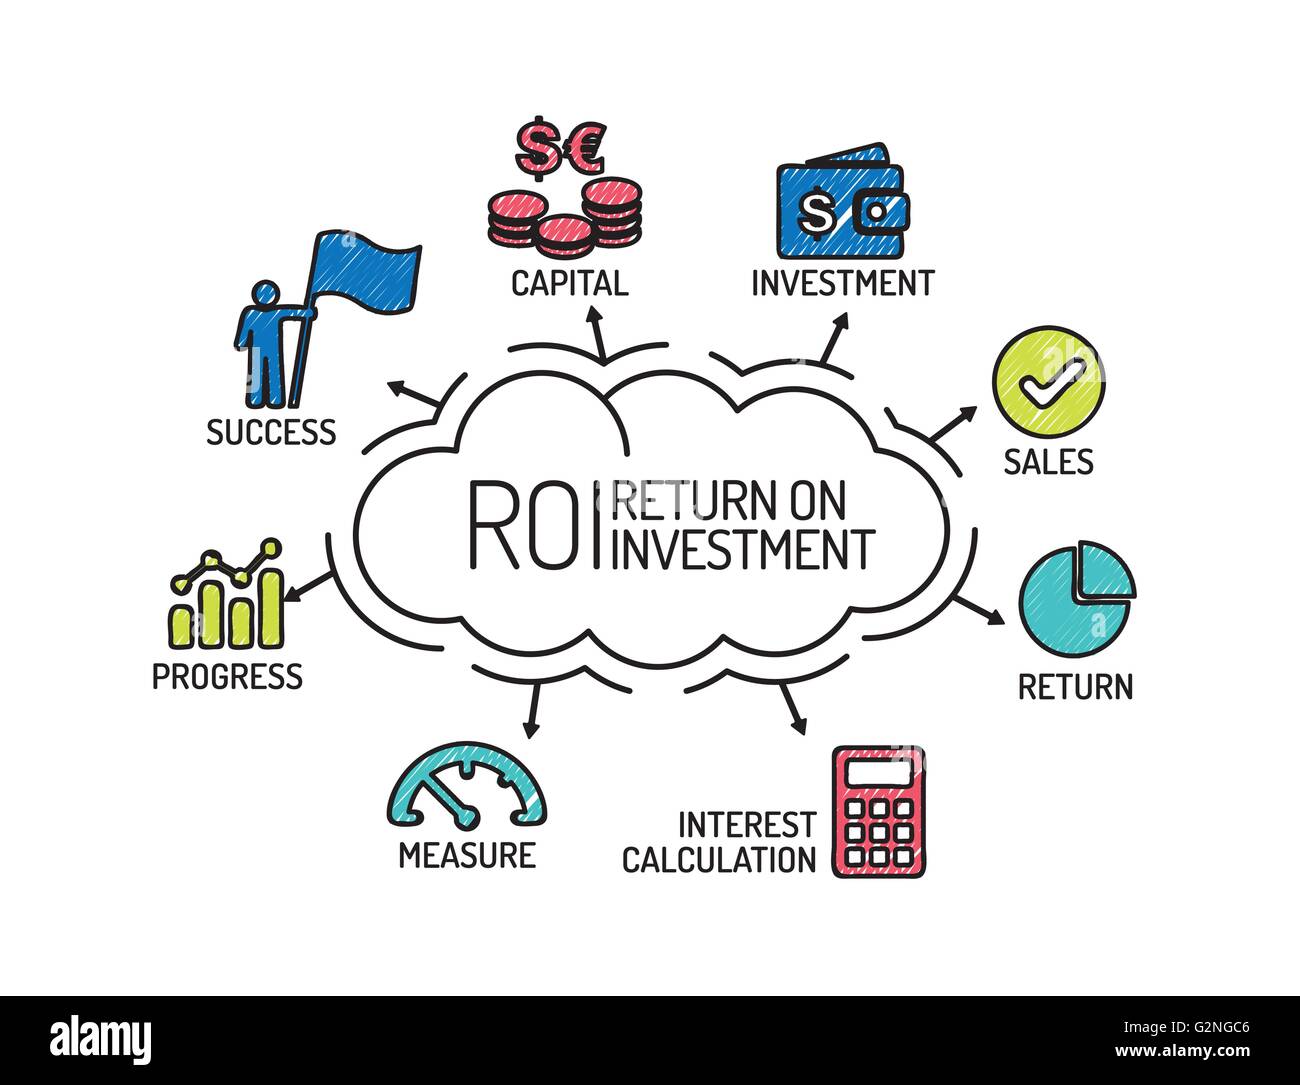 ROI Return on Investment. Diagramm mit Keywords und Symbole. Skizze Stock Vektor